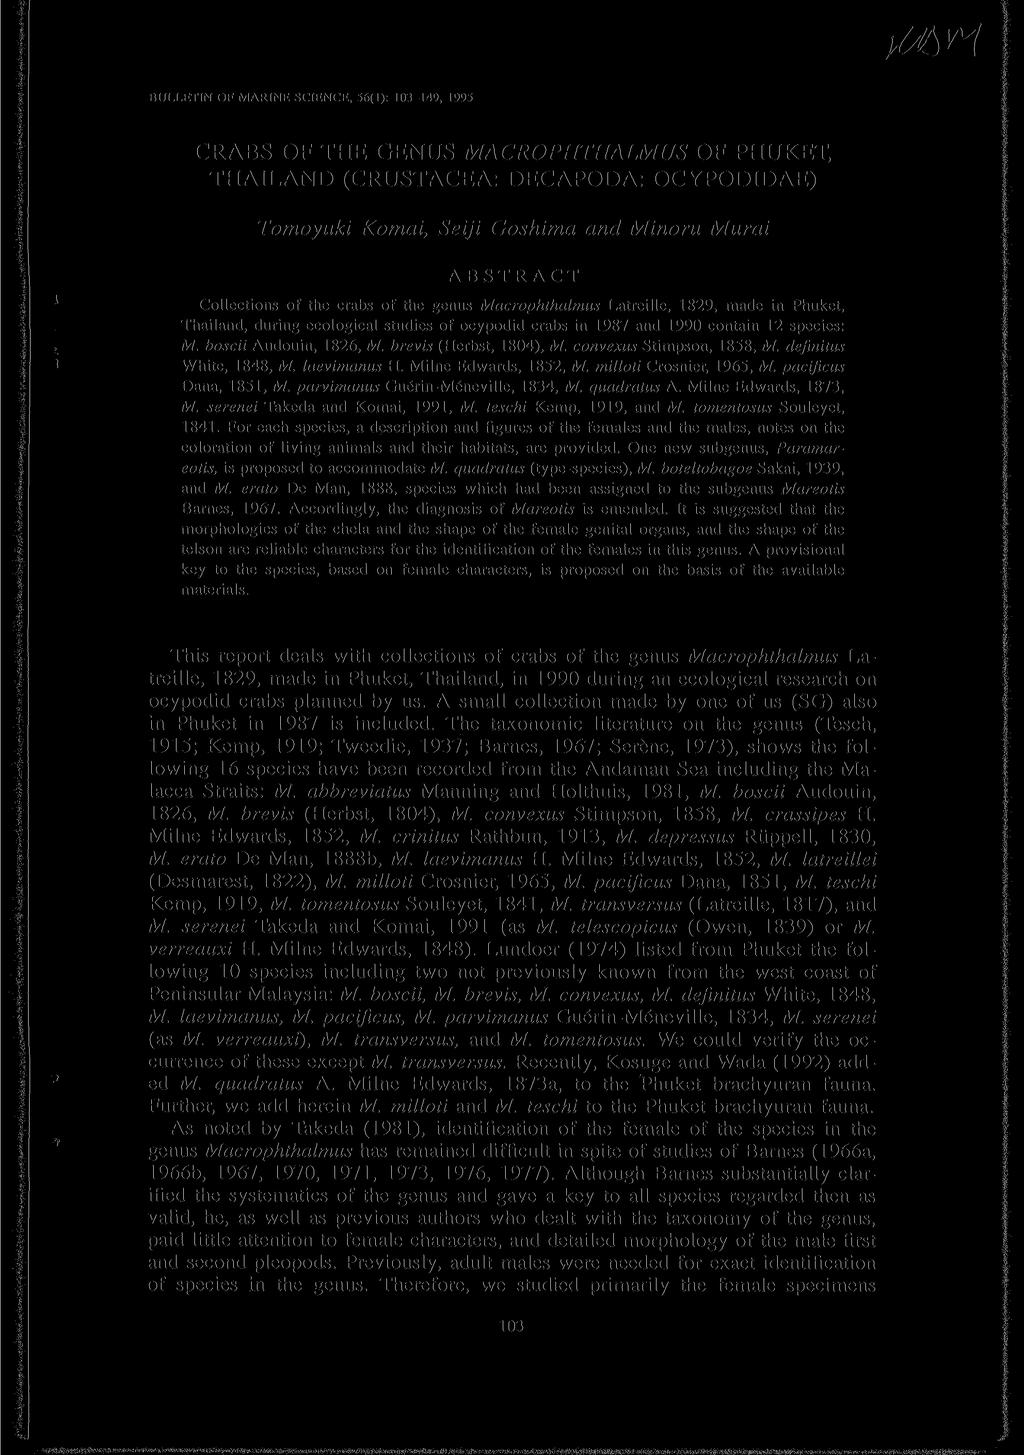 BULLETIN OF MARINE SCIENCE, 56(1): 103-149, 1995 CRABS OF THE GENUS MACROPHTHALMUS OF PHUKET, THAILAND (CRUSTACEA: DECAPODA: OCYPODIDAE) Tomoyuki Komai, Seiji Goshima and Minoru Murai ABSTRACT